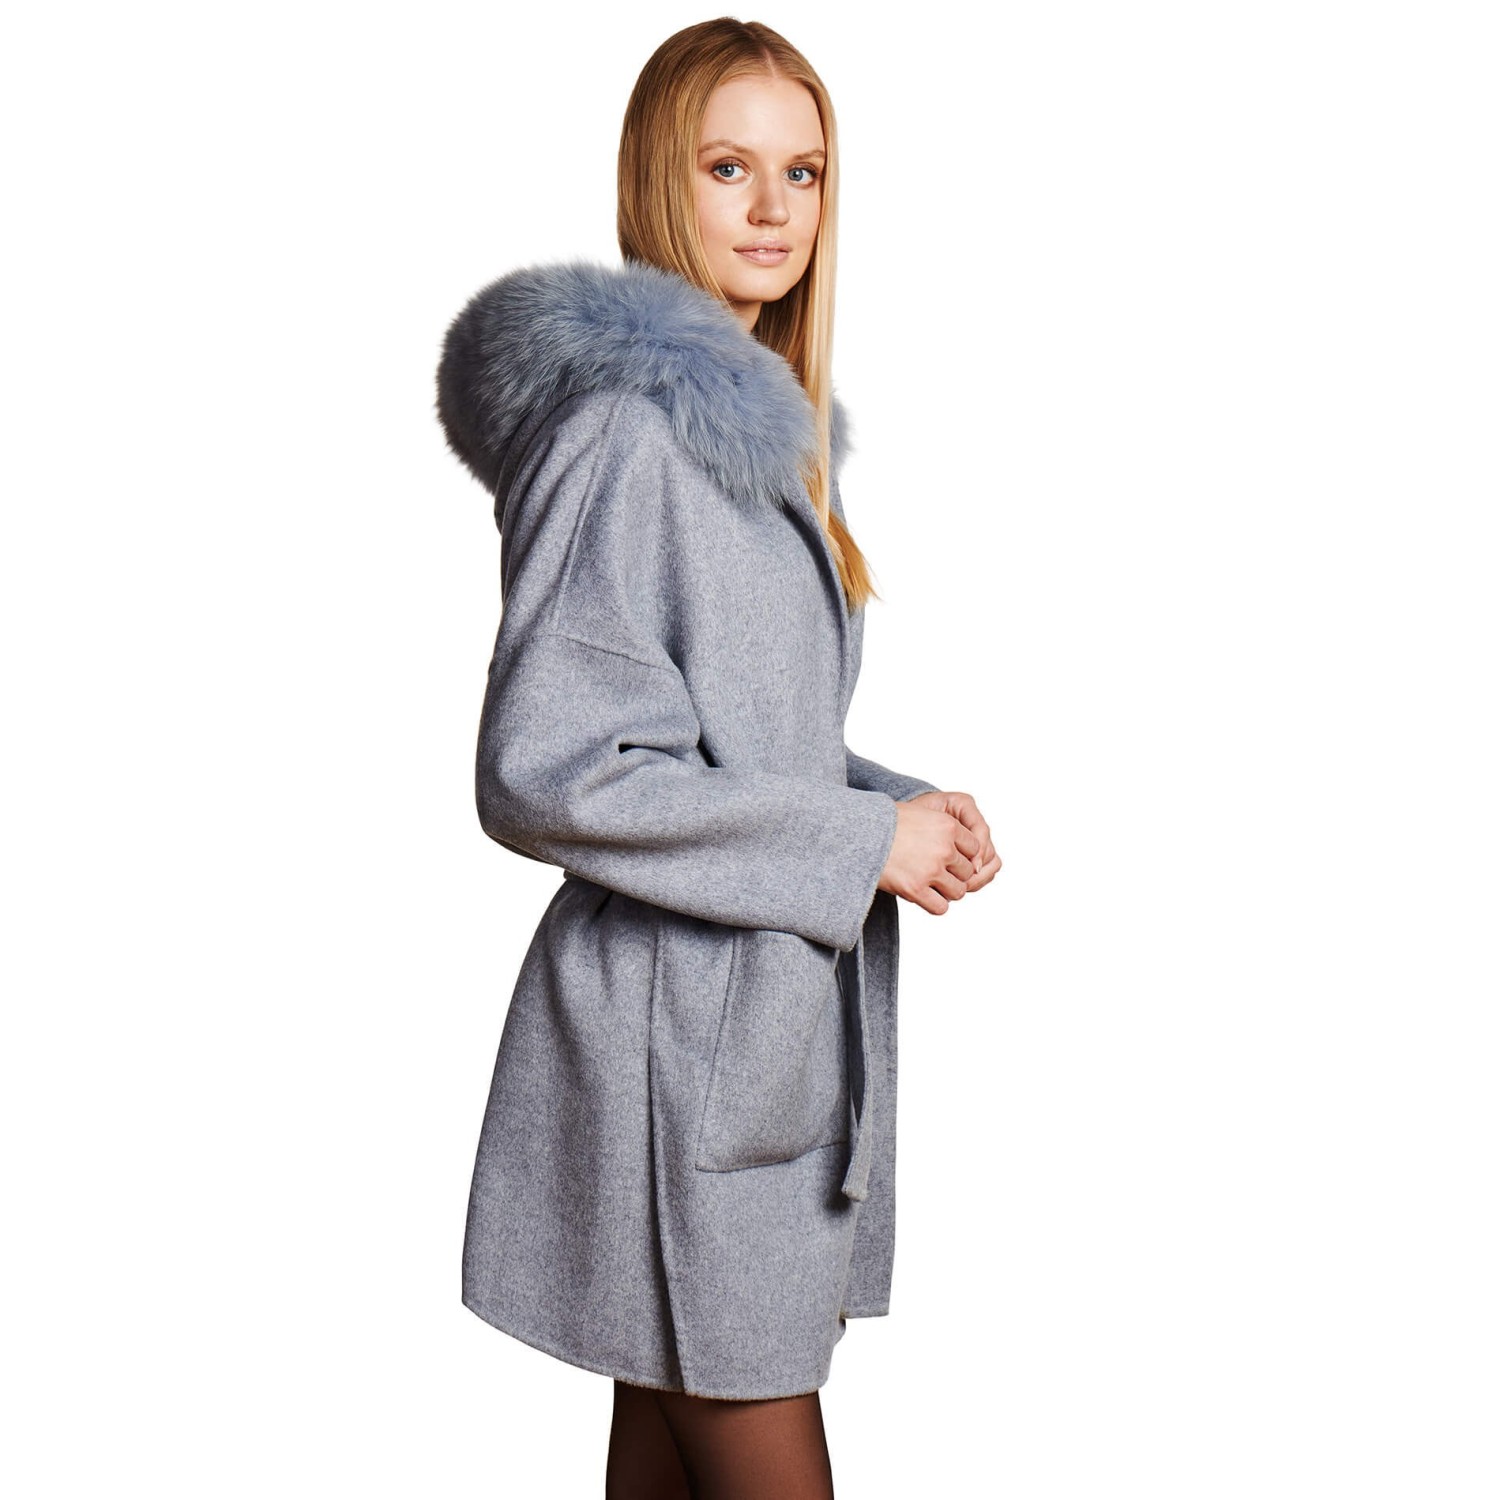 Woolcoat with fur collar "JULES"Fur Collar, Fur Trim, Trenchcoat, Cardigan, Woolvest